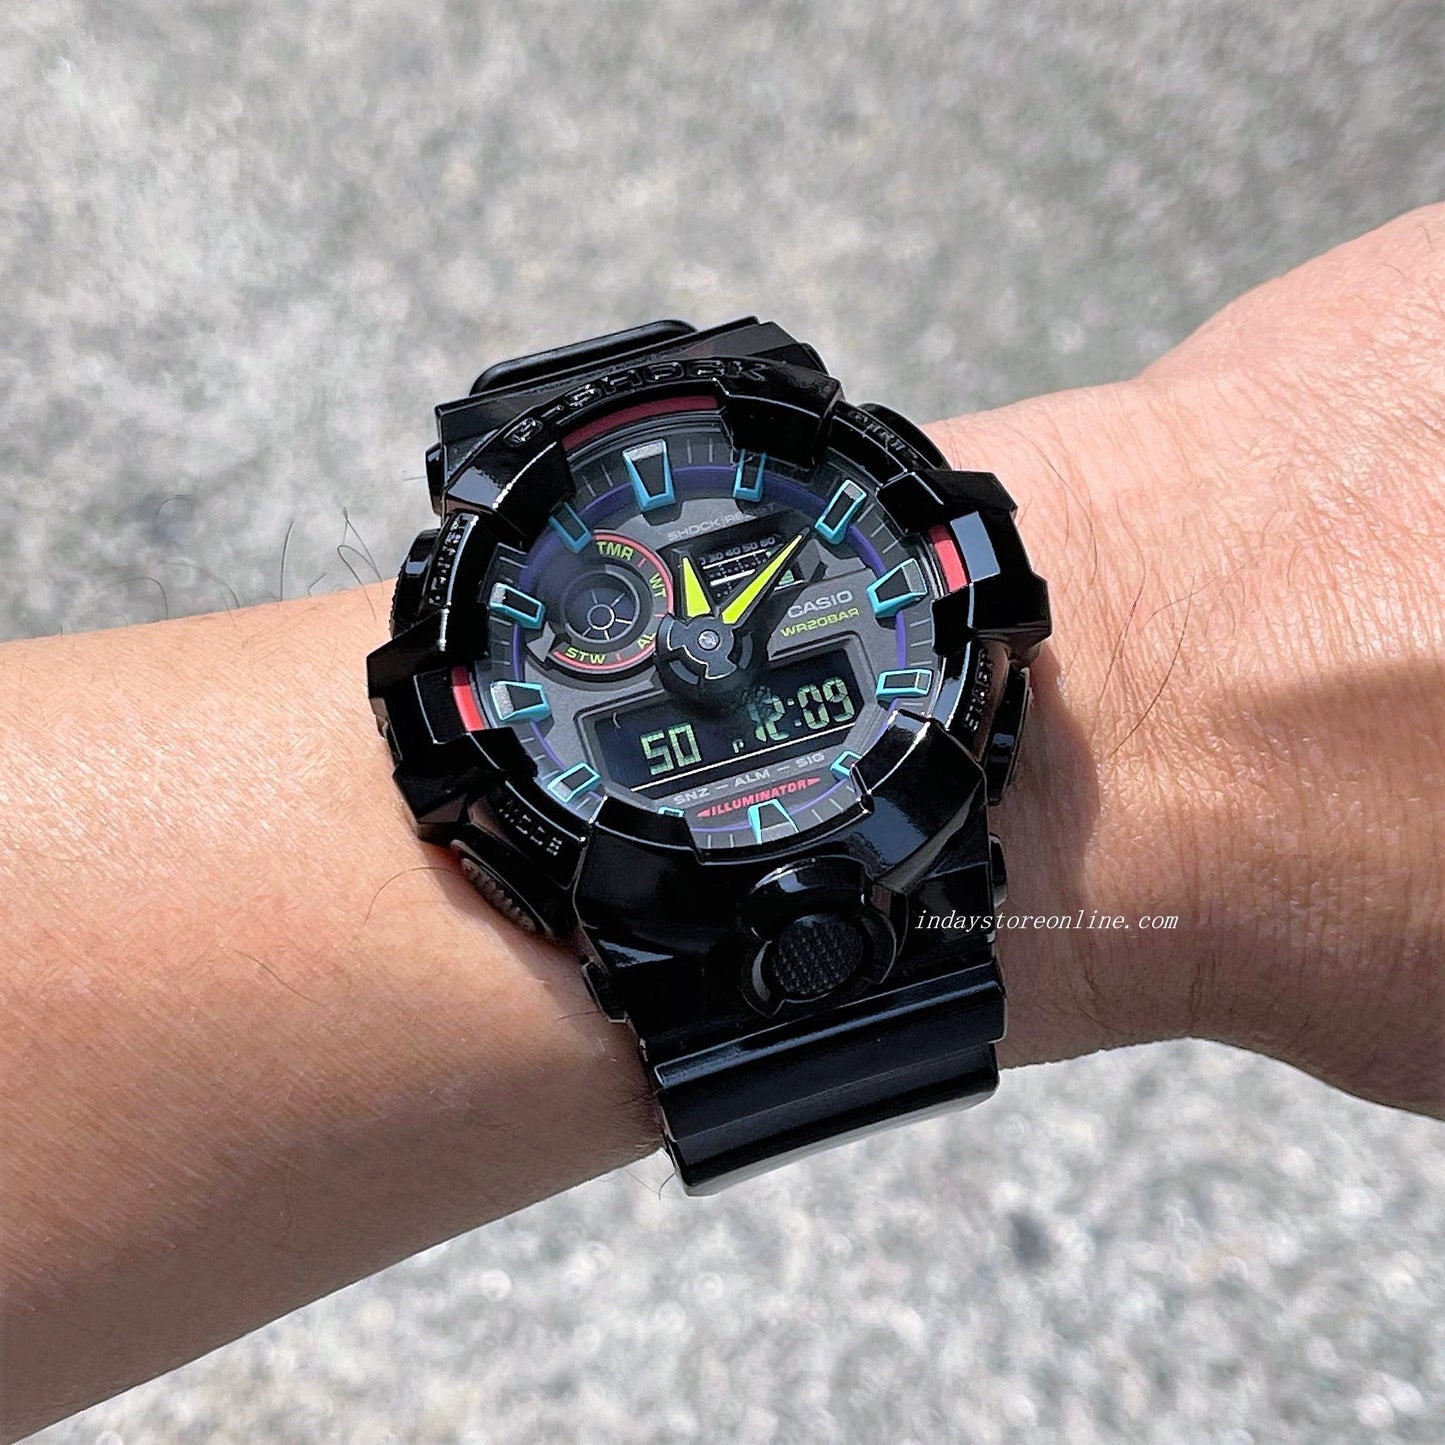 Casio G-Shock Men's Watch GA-700RGB-1A Analog-Digital Virtual Rainbow lineup GA-700 Series